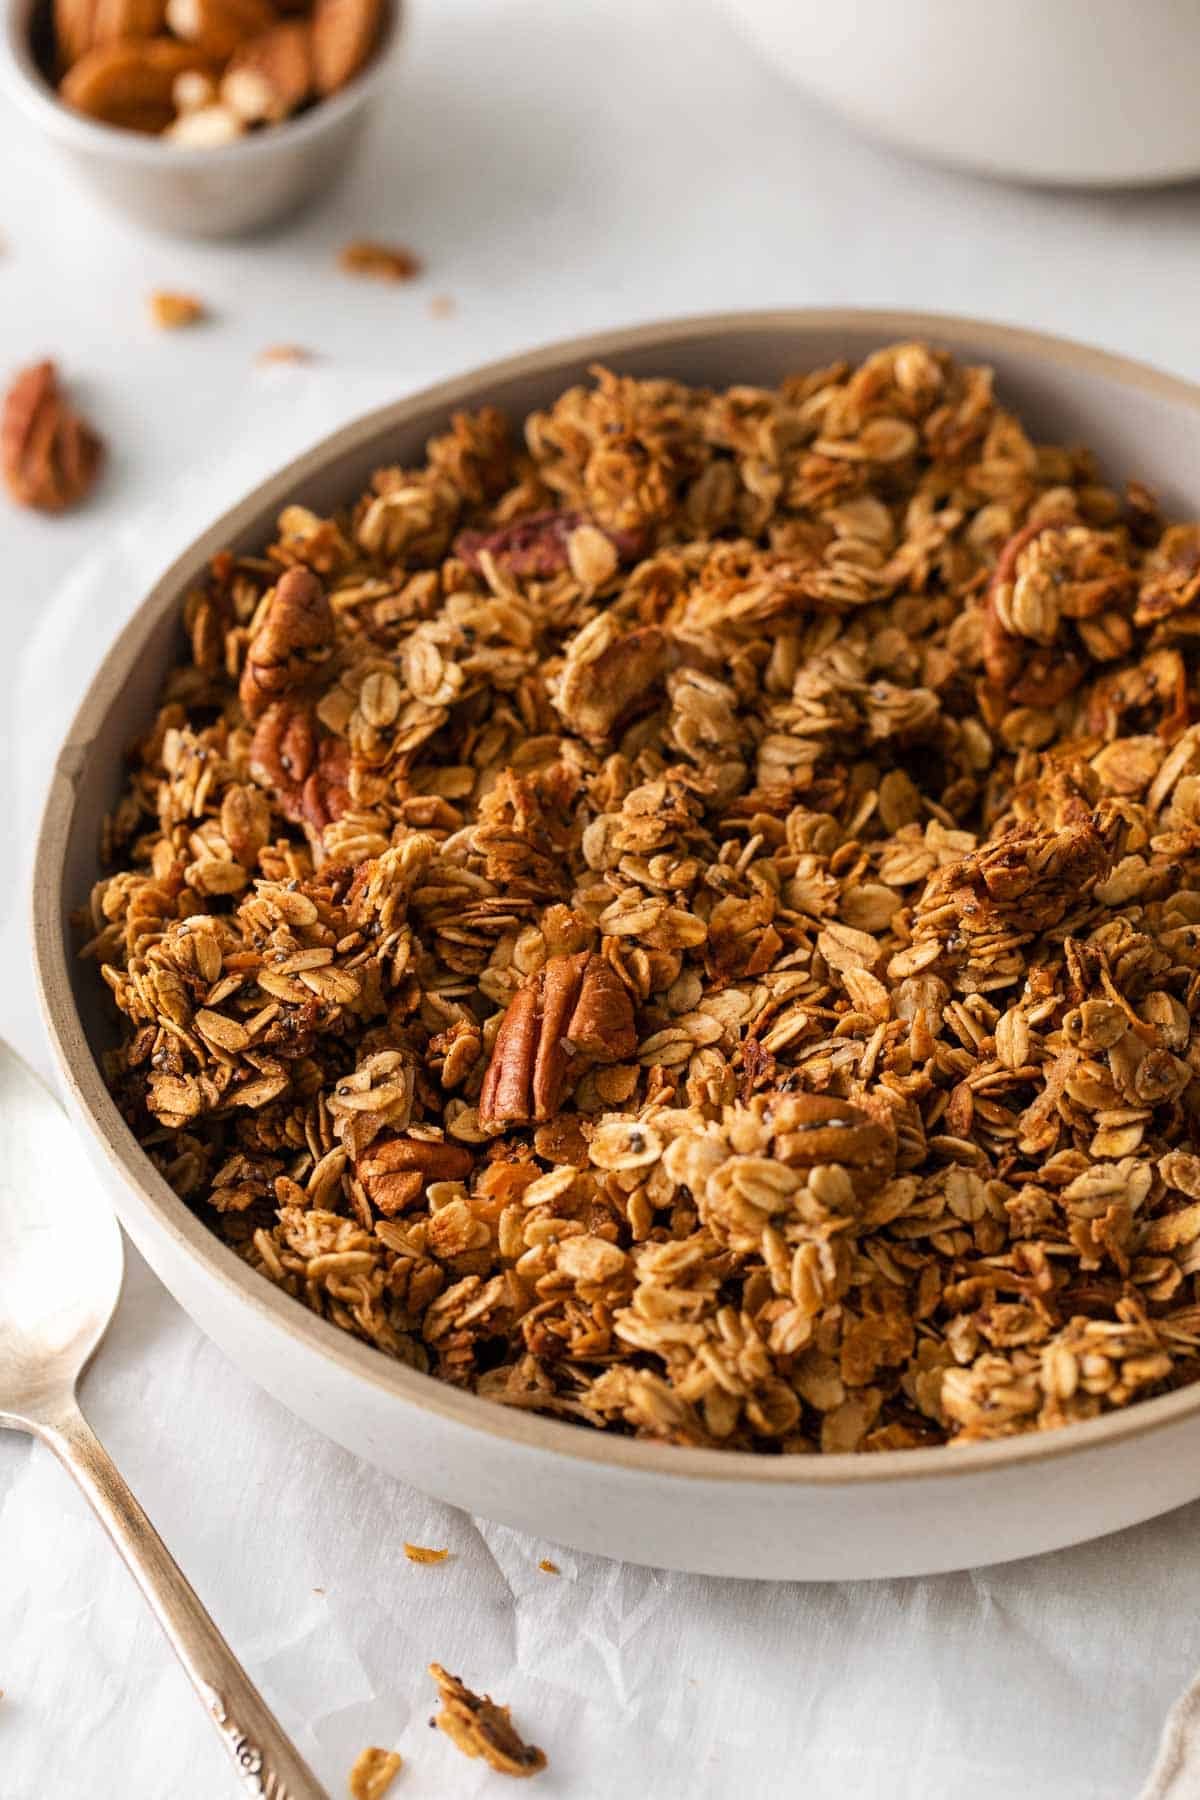 Gluten-free granola in a bowl